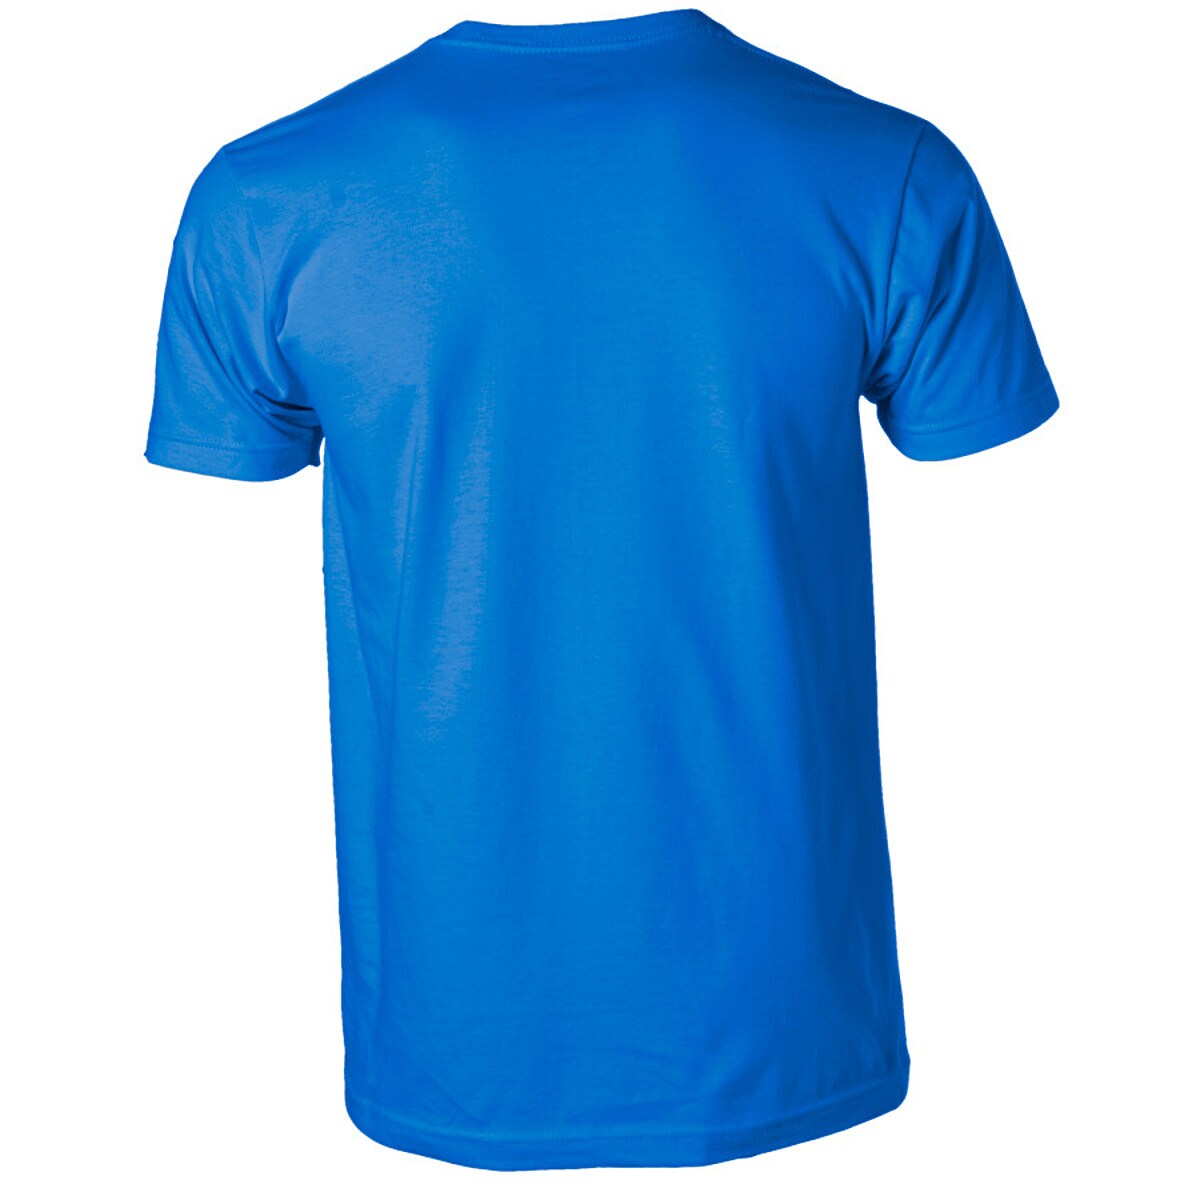 VonZipper Safari T-Shirt - Short-Sleeve - Men's - Clothing